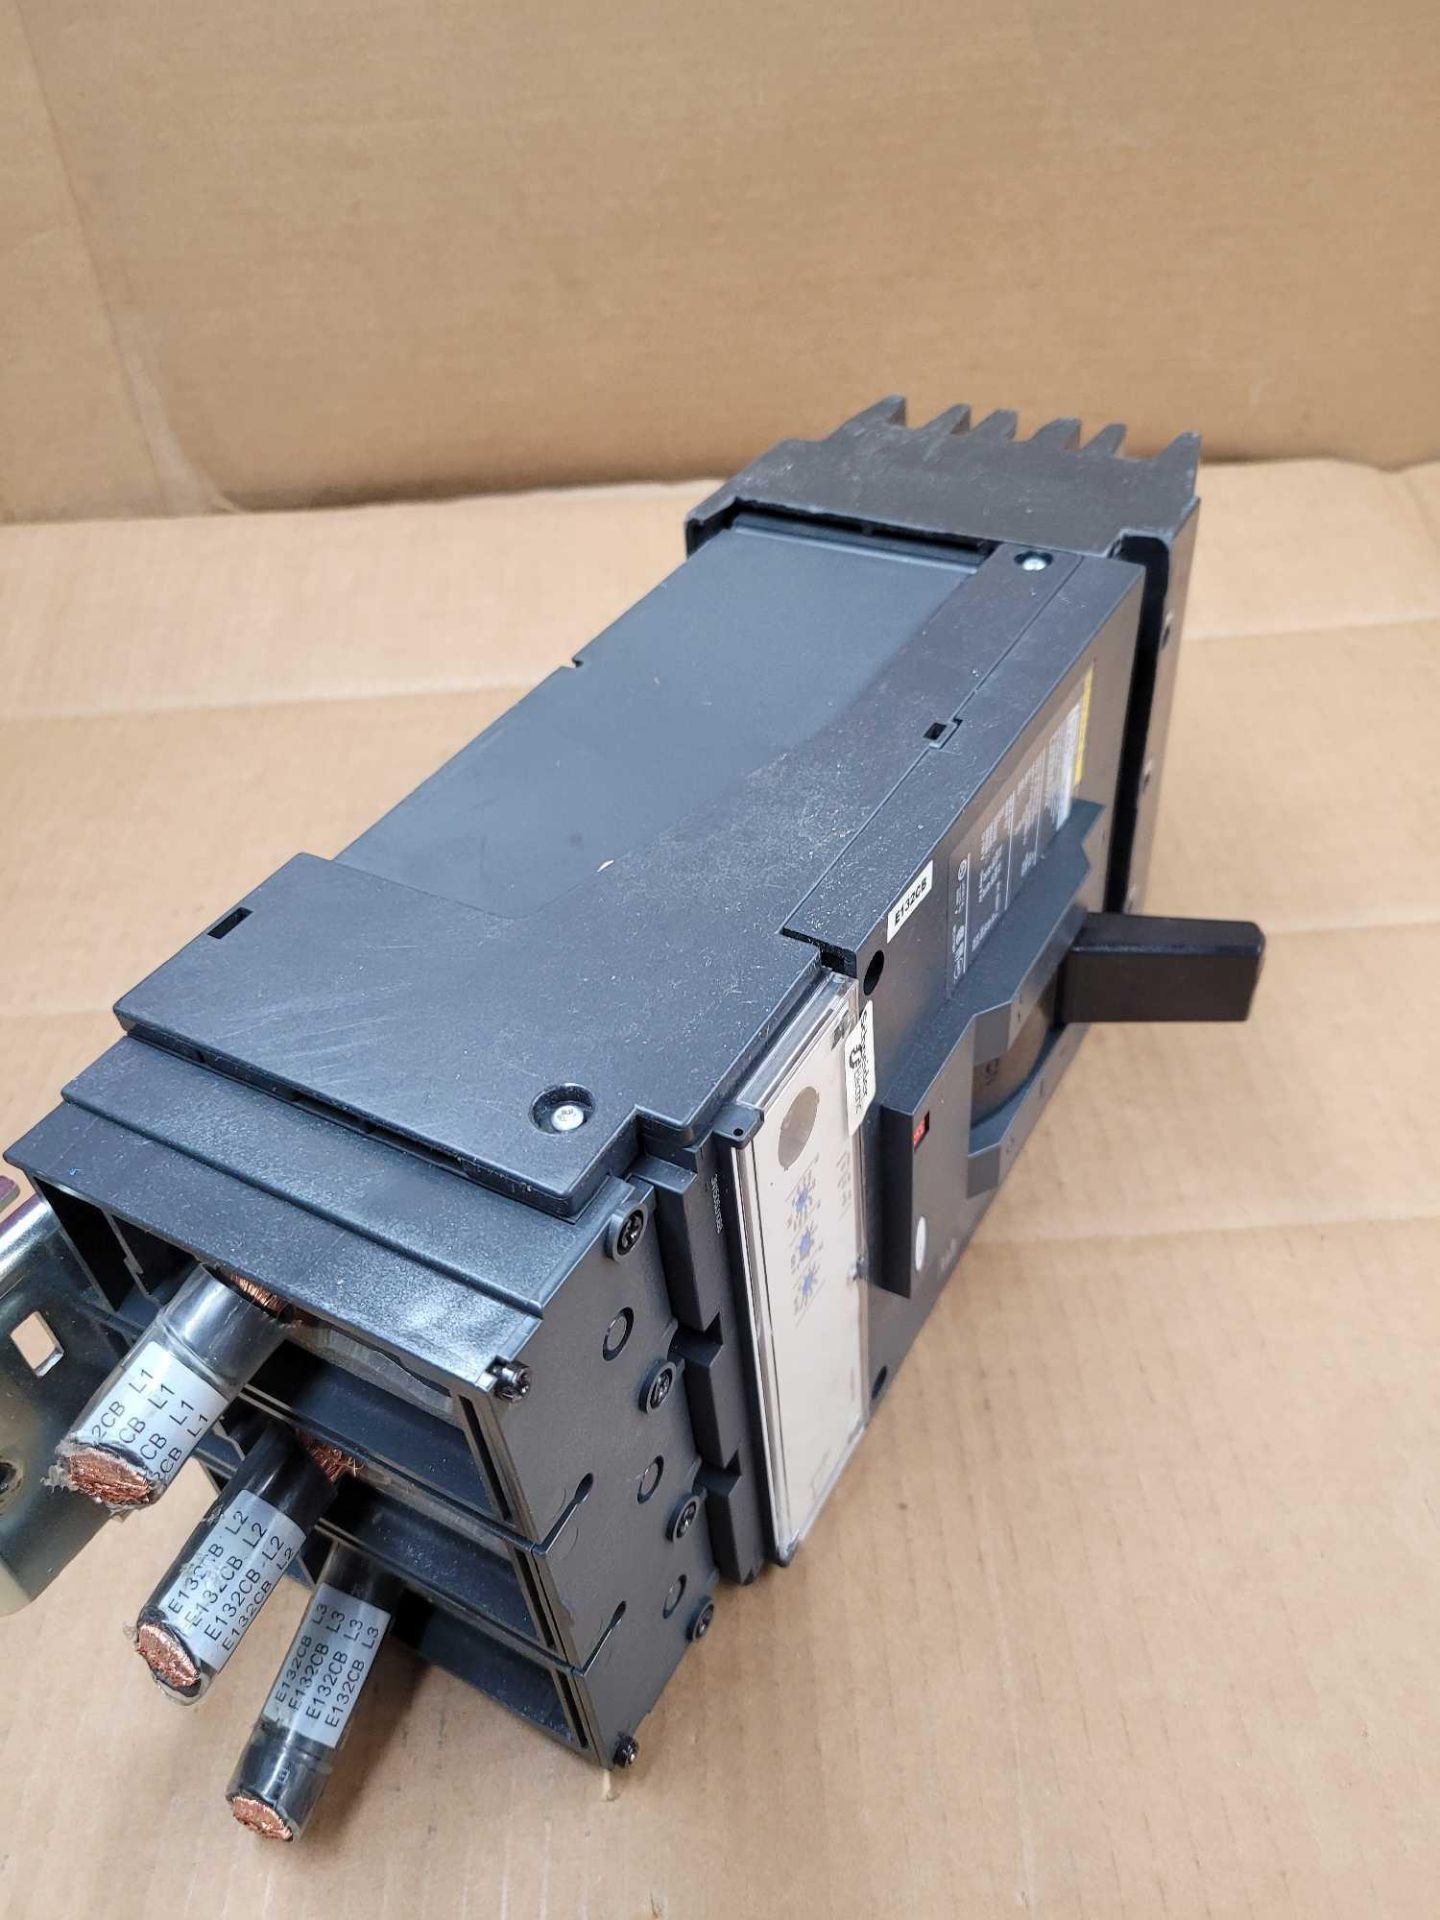 SQUARE D LJA36400U31X / 400 Amp Molded Case Circuit Breaker  /  Lot Weight: 16.4 lbs - Image 5 of 6